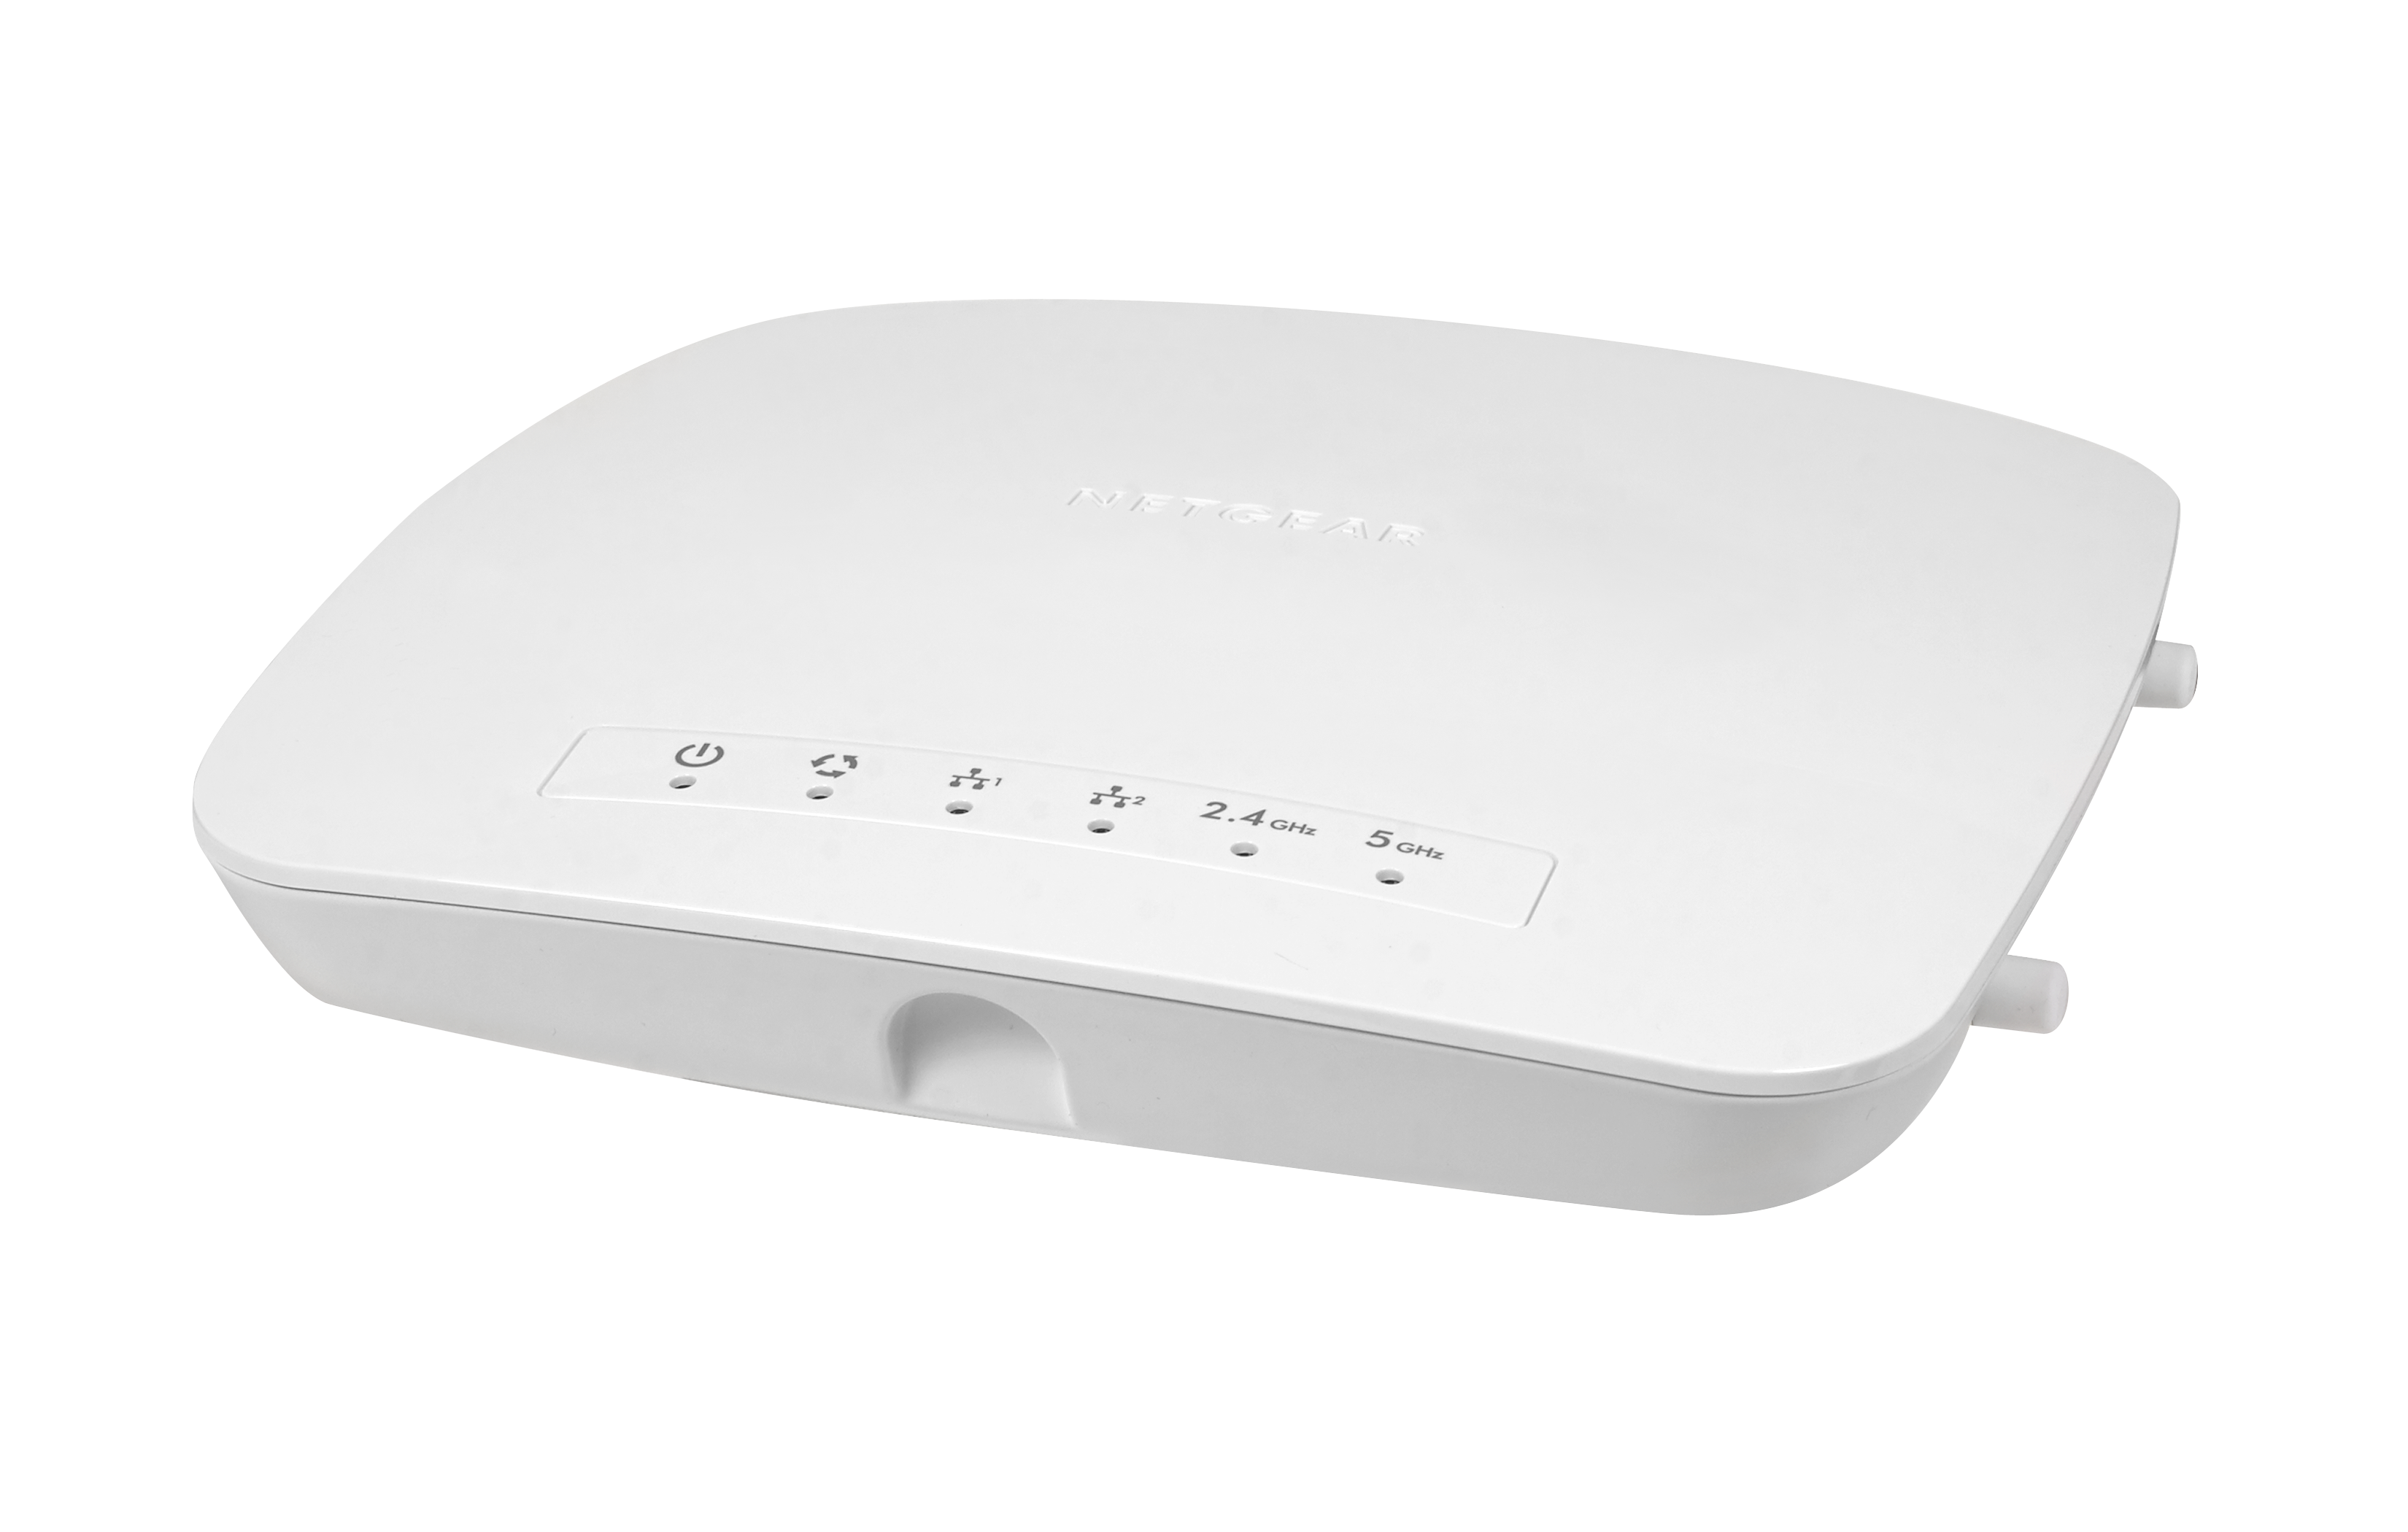 NETGEAR推出全新802.11ac Wave2商用無線AP - WAC740，可連接2.5G BASE-T交換器，發揮2300Mbps高速WiFi！